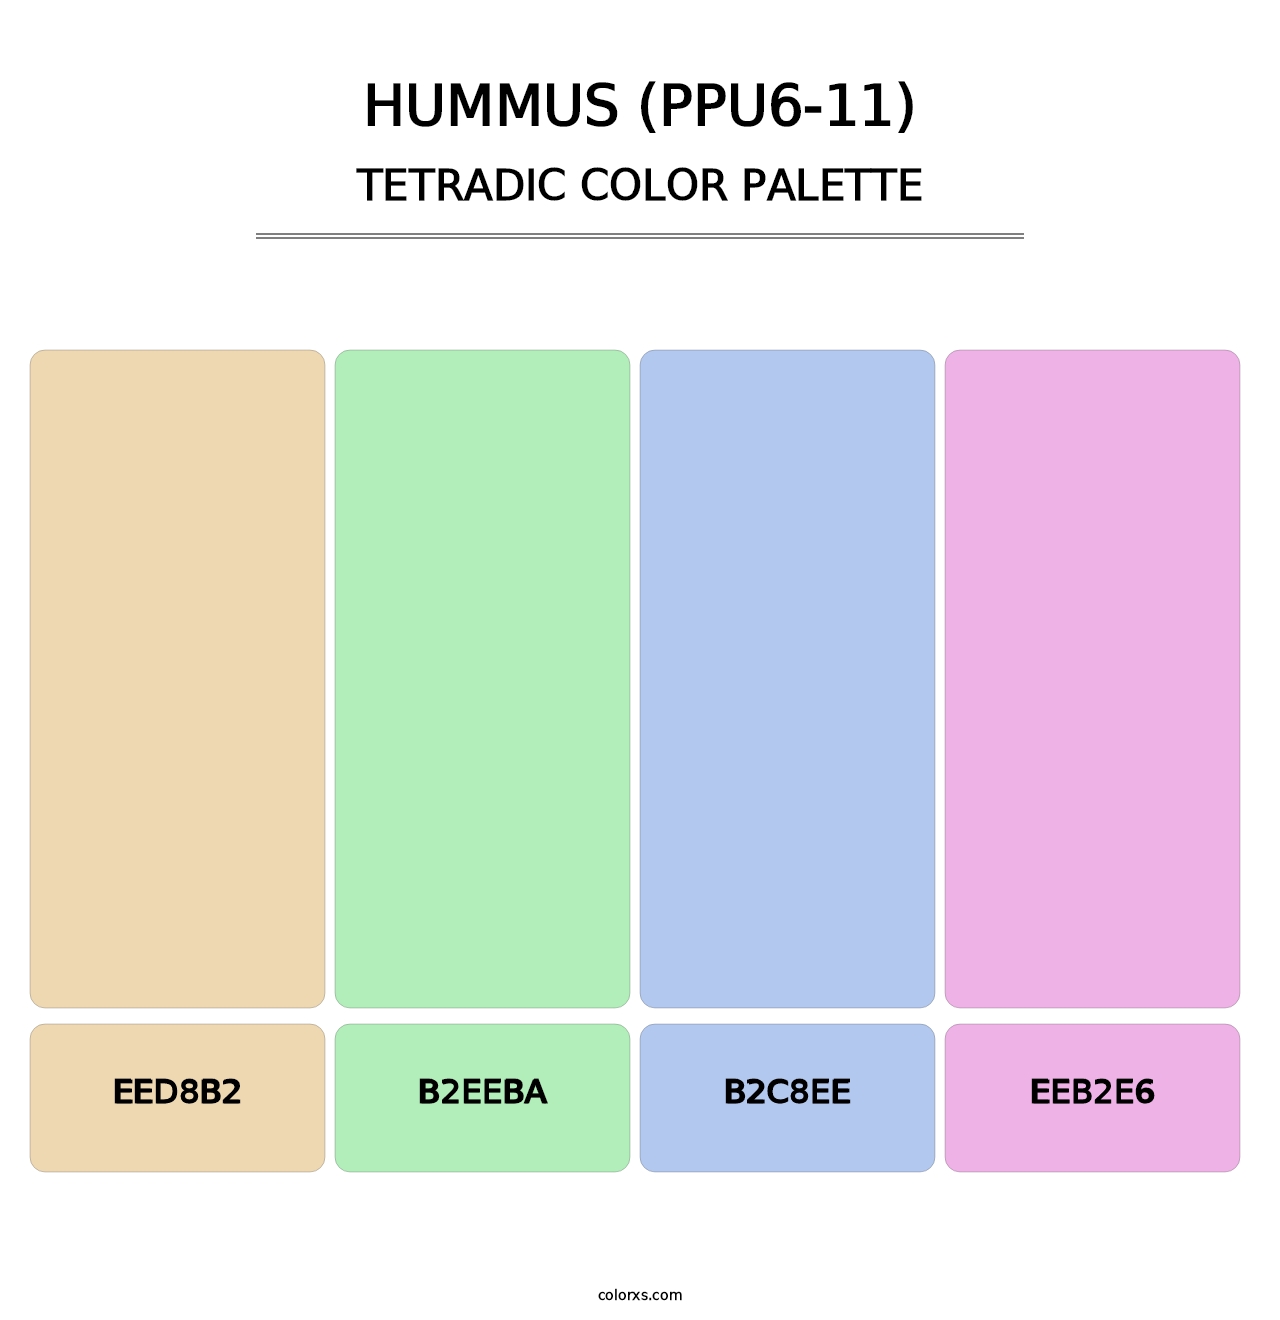 Hummus (PPU6-11) - Tetradic Color Palette